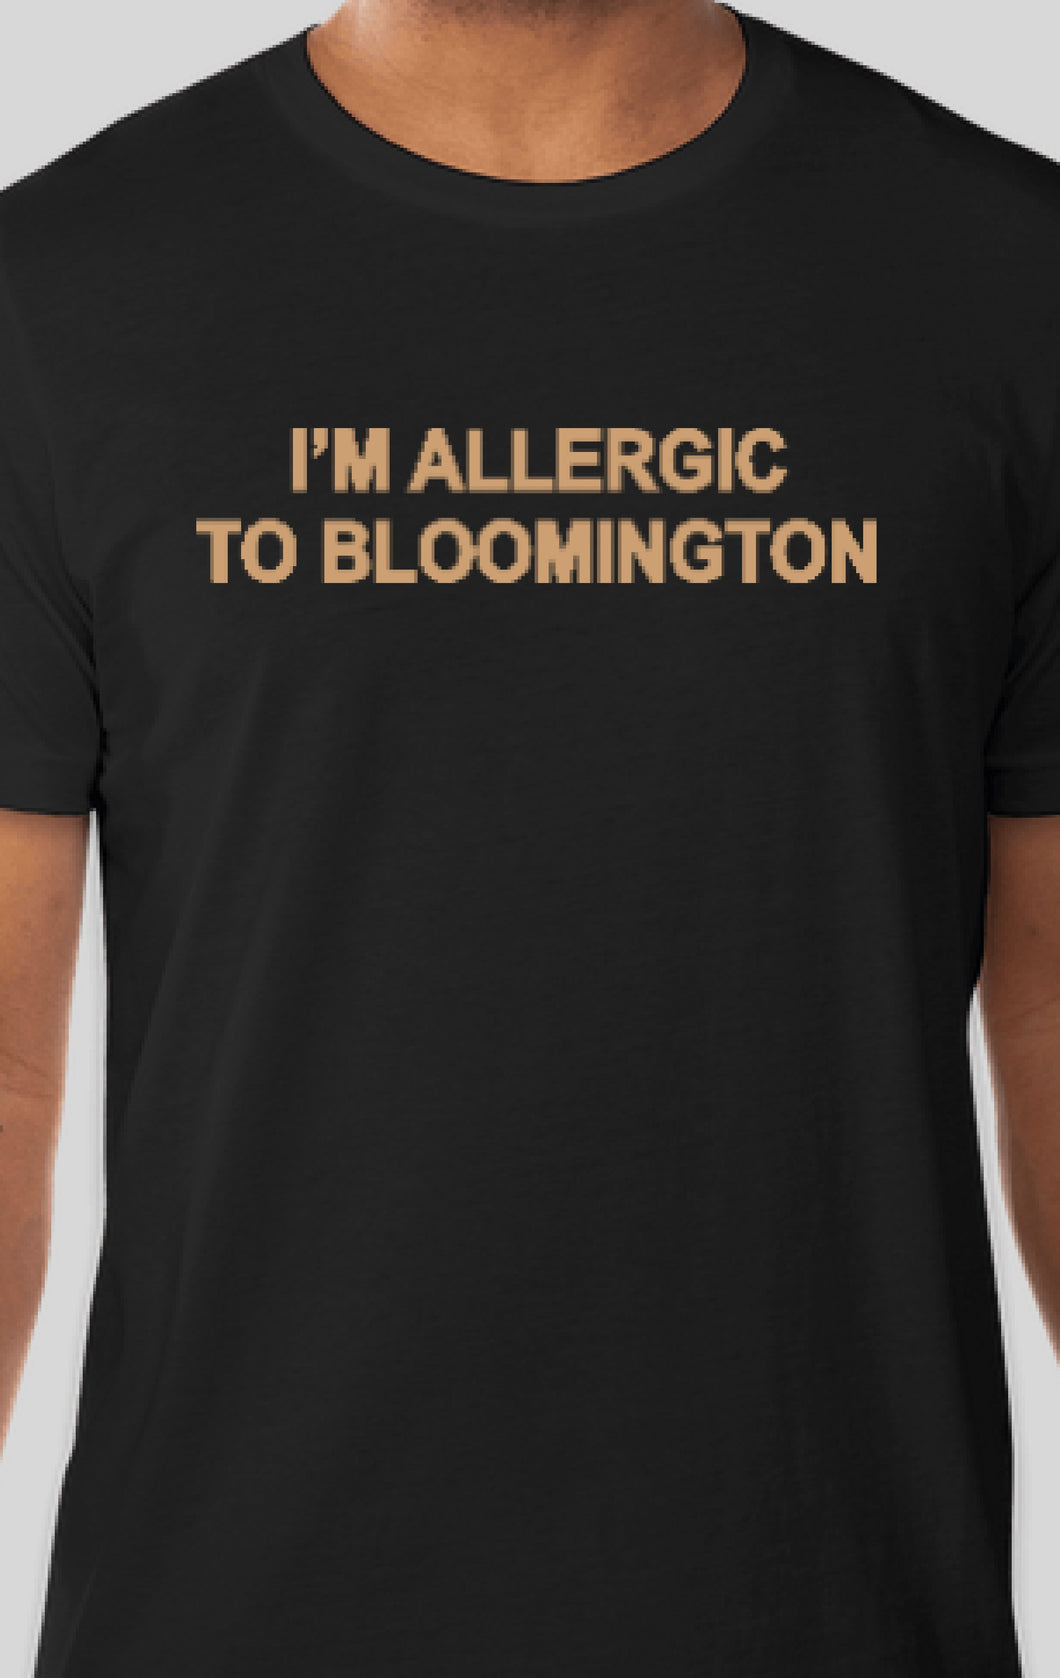 Allergic to Bloomington